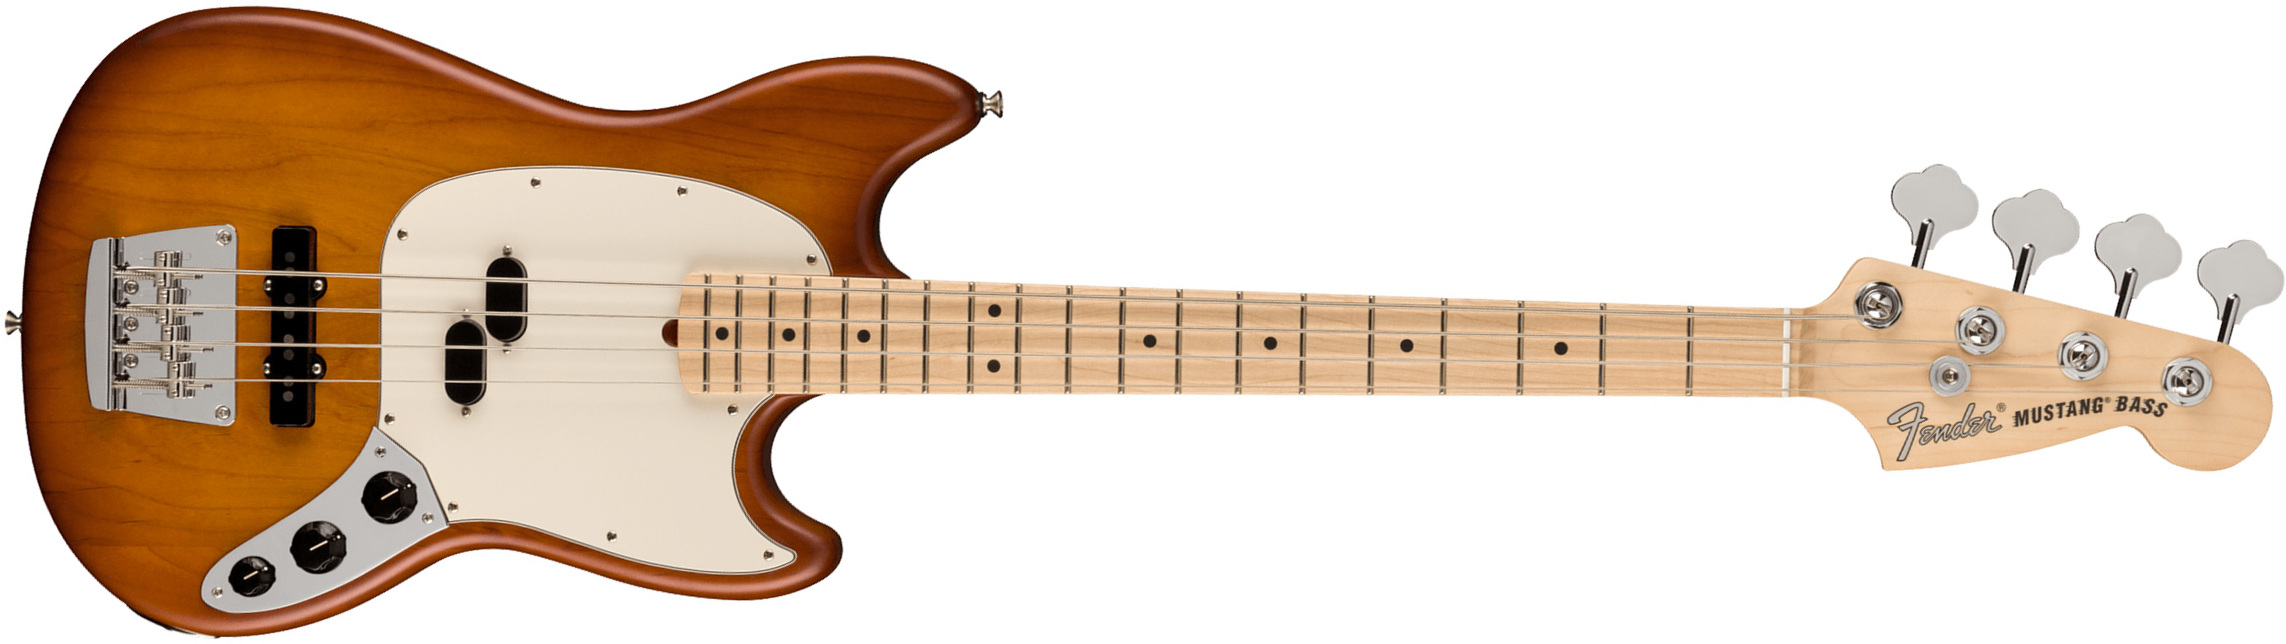 Fender Mustang Bass American Performer Ltd Usa Rw - Honey Burst Satin - Solidbody E-bass - Main picture